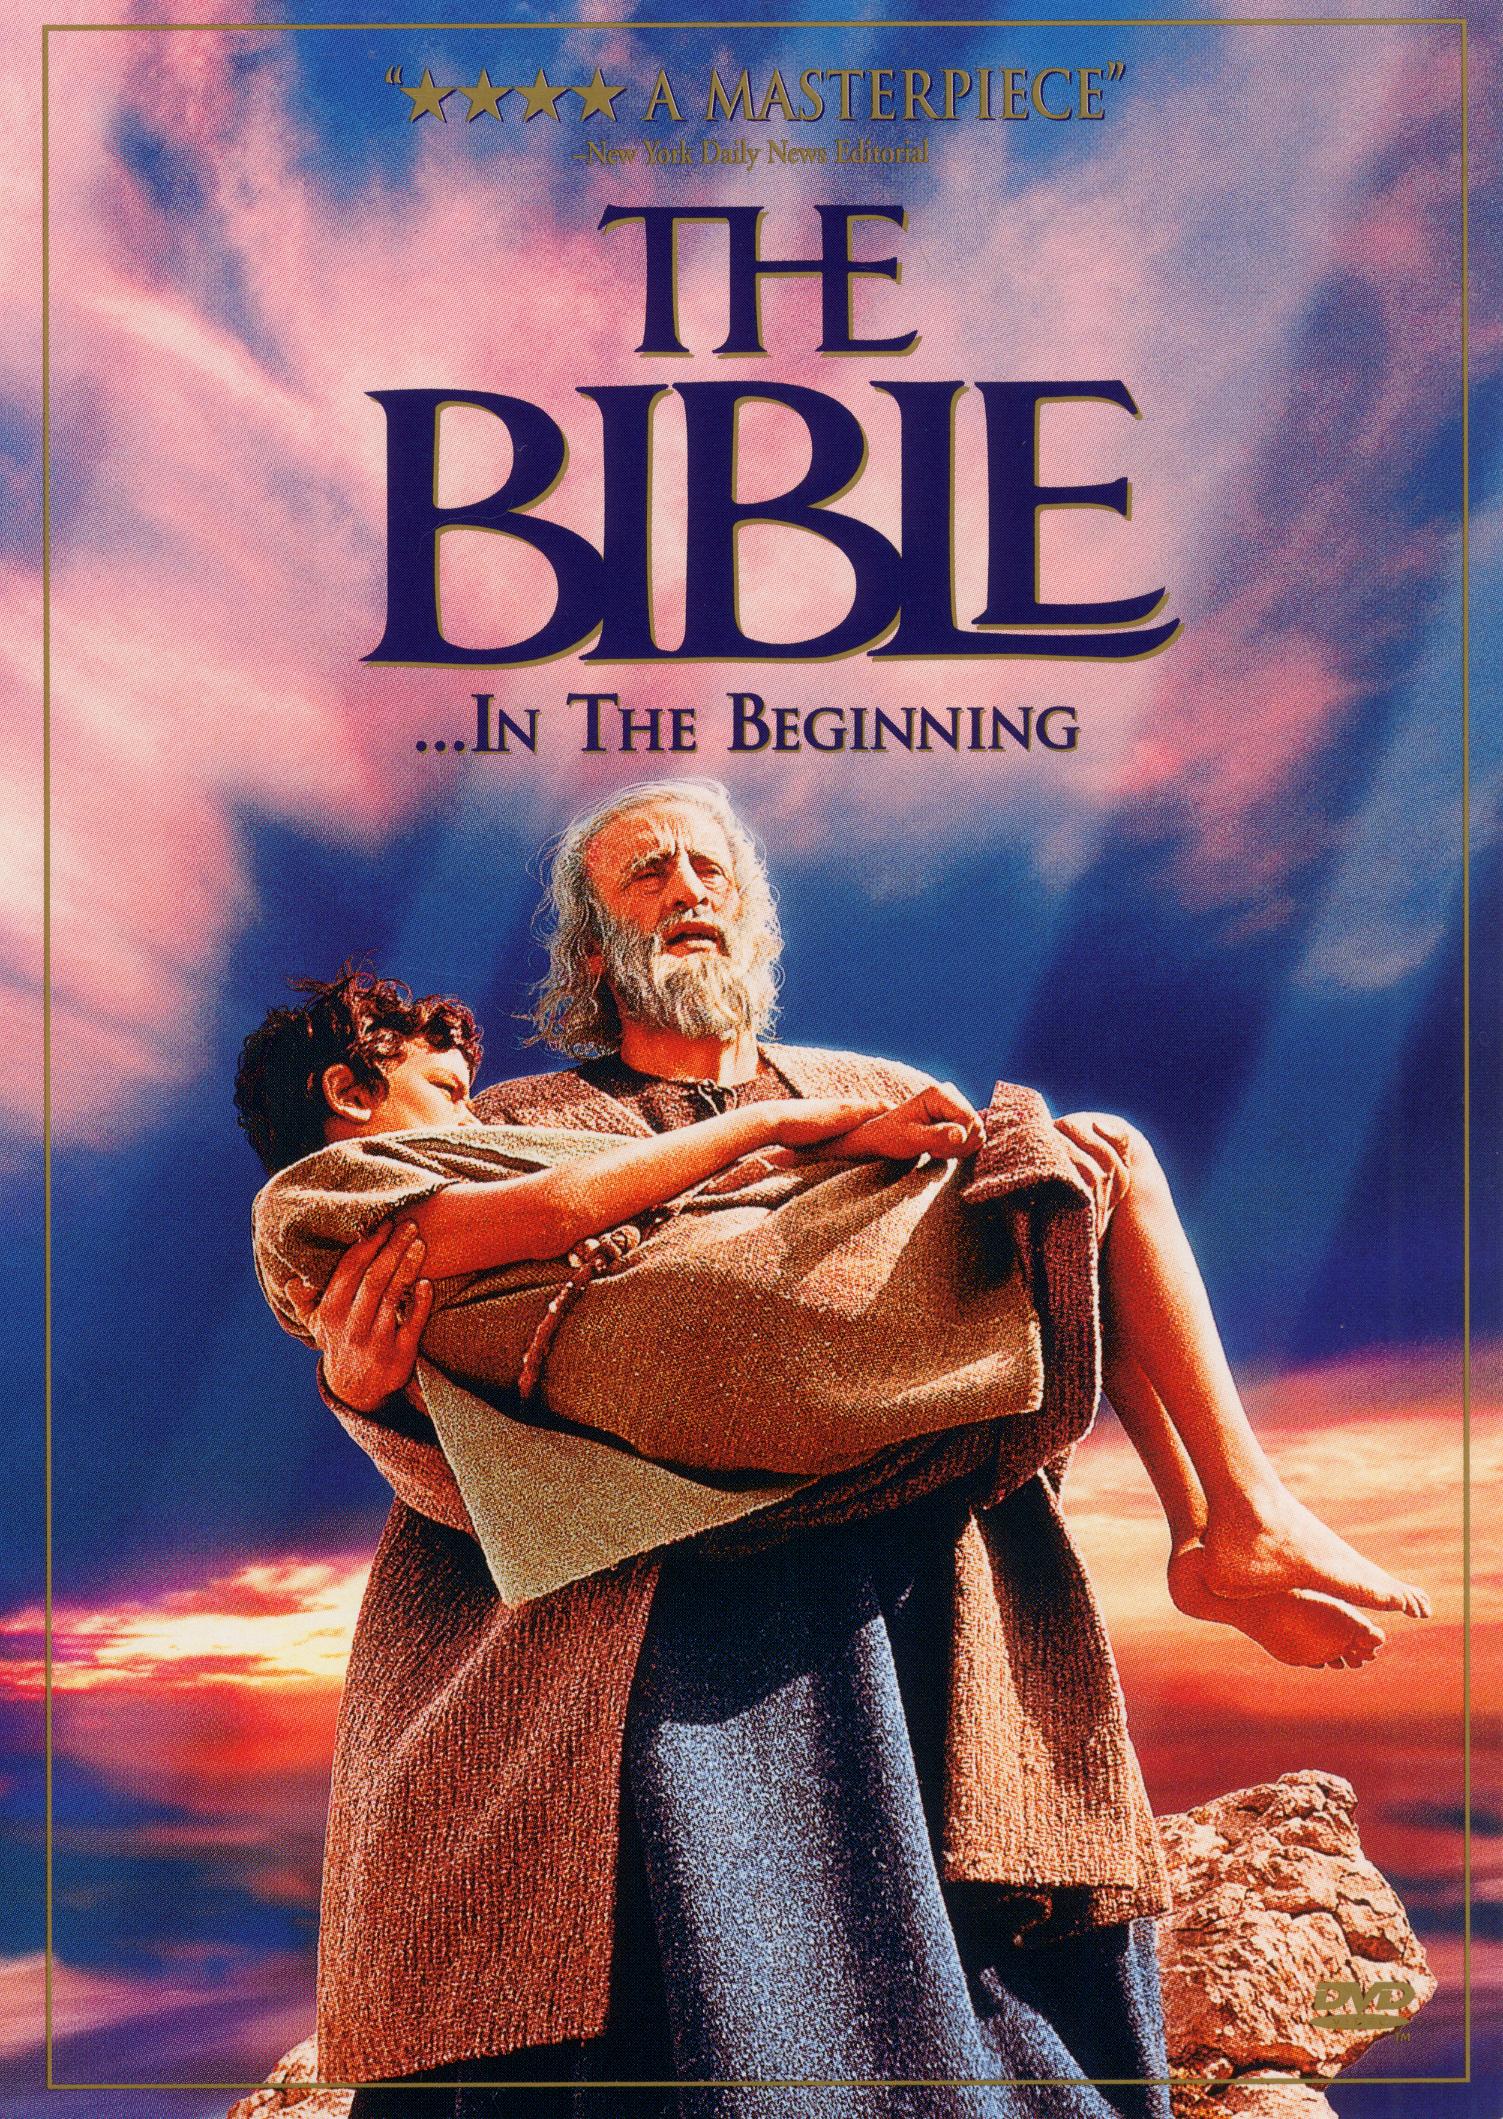 Bible cover art